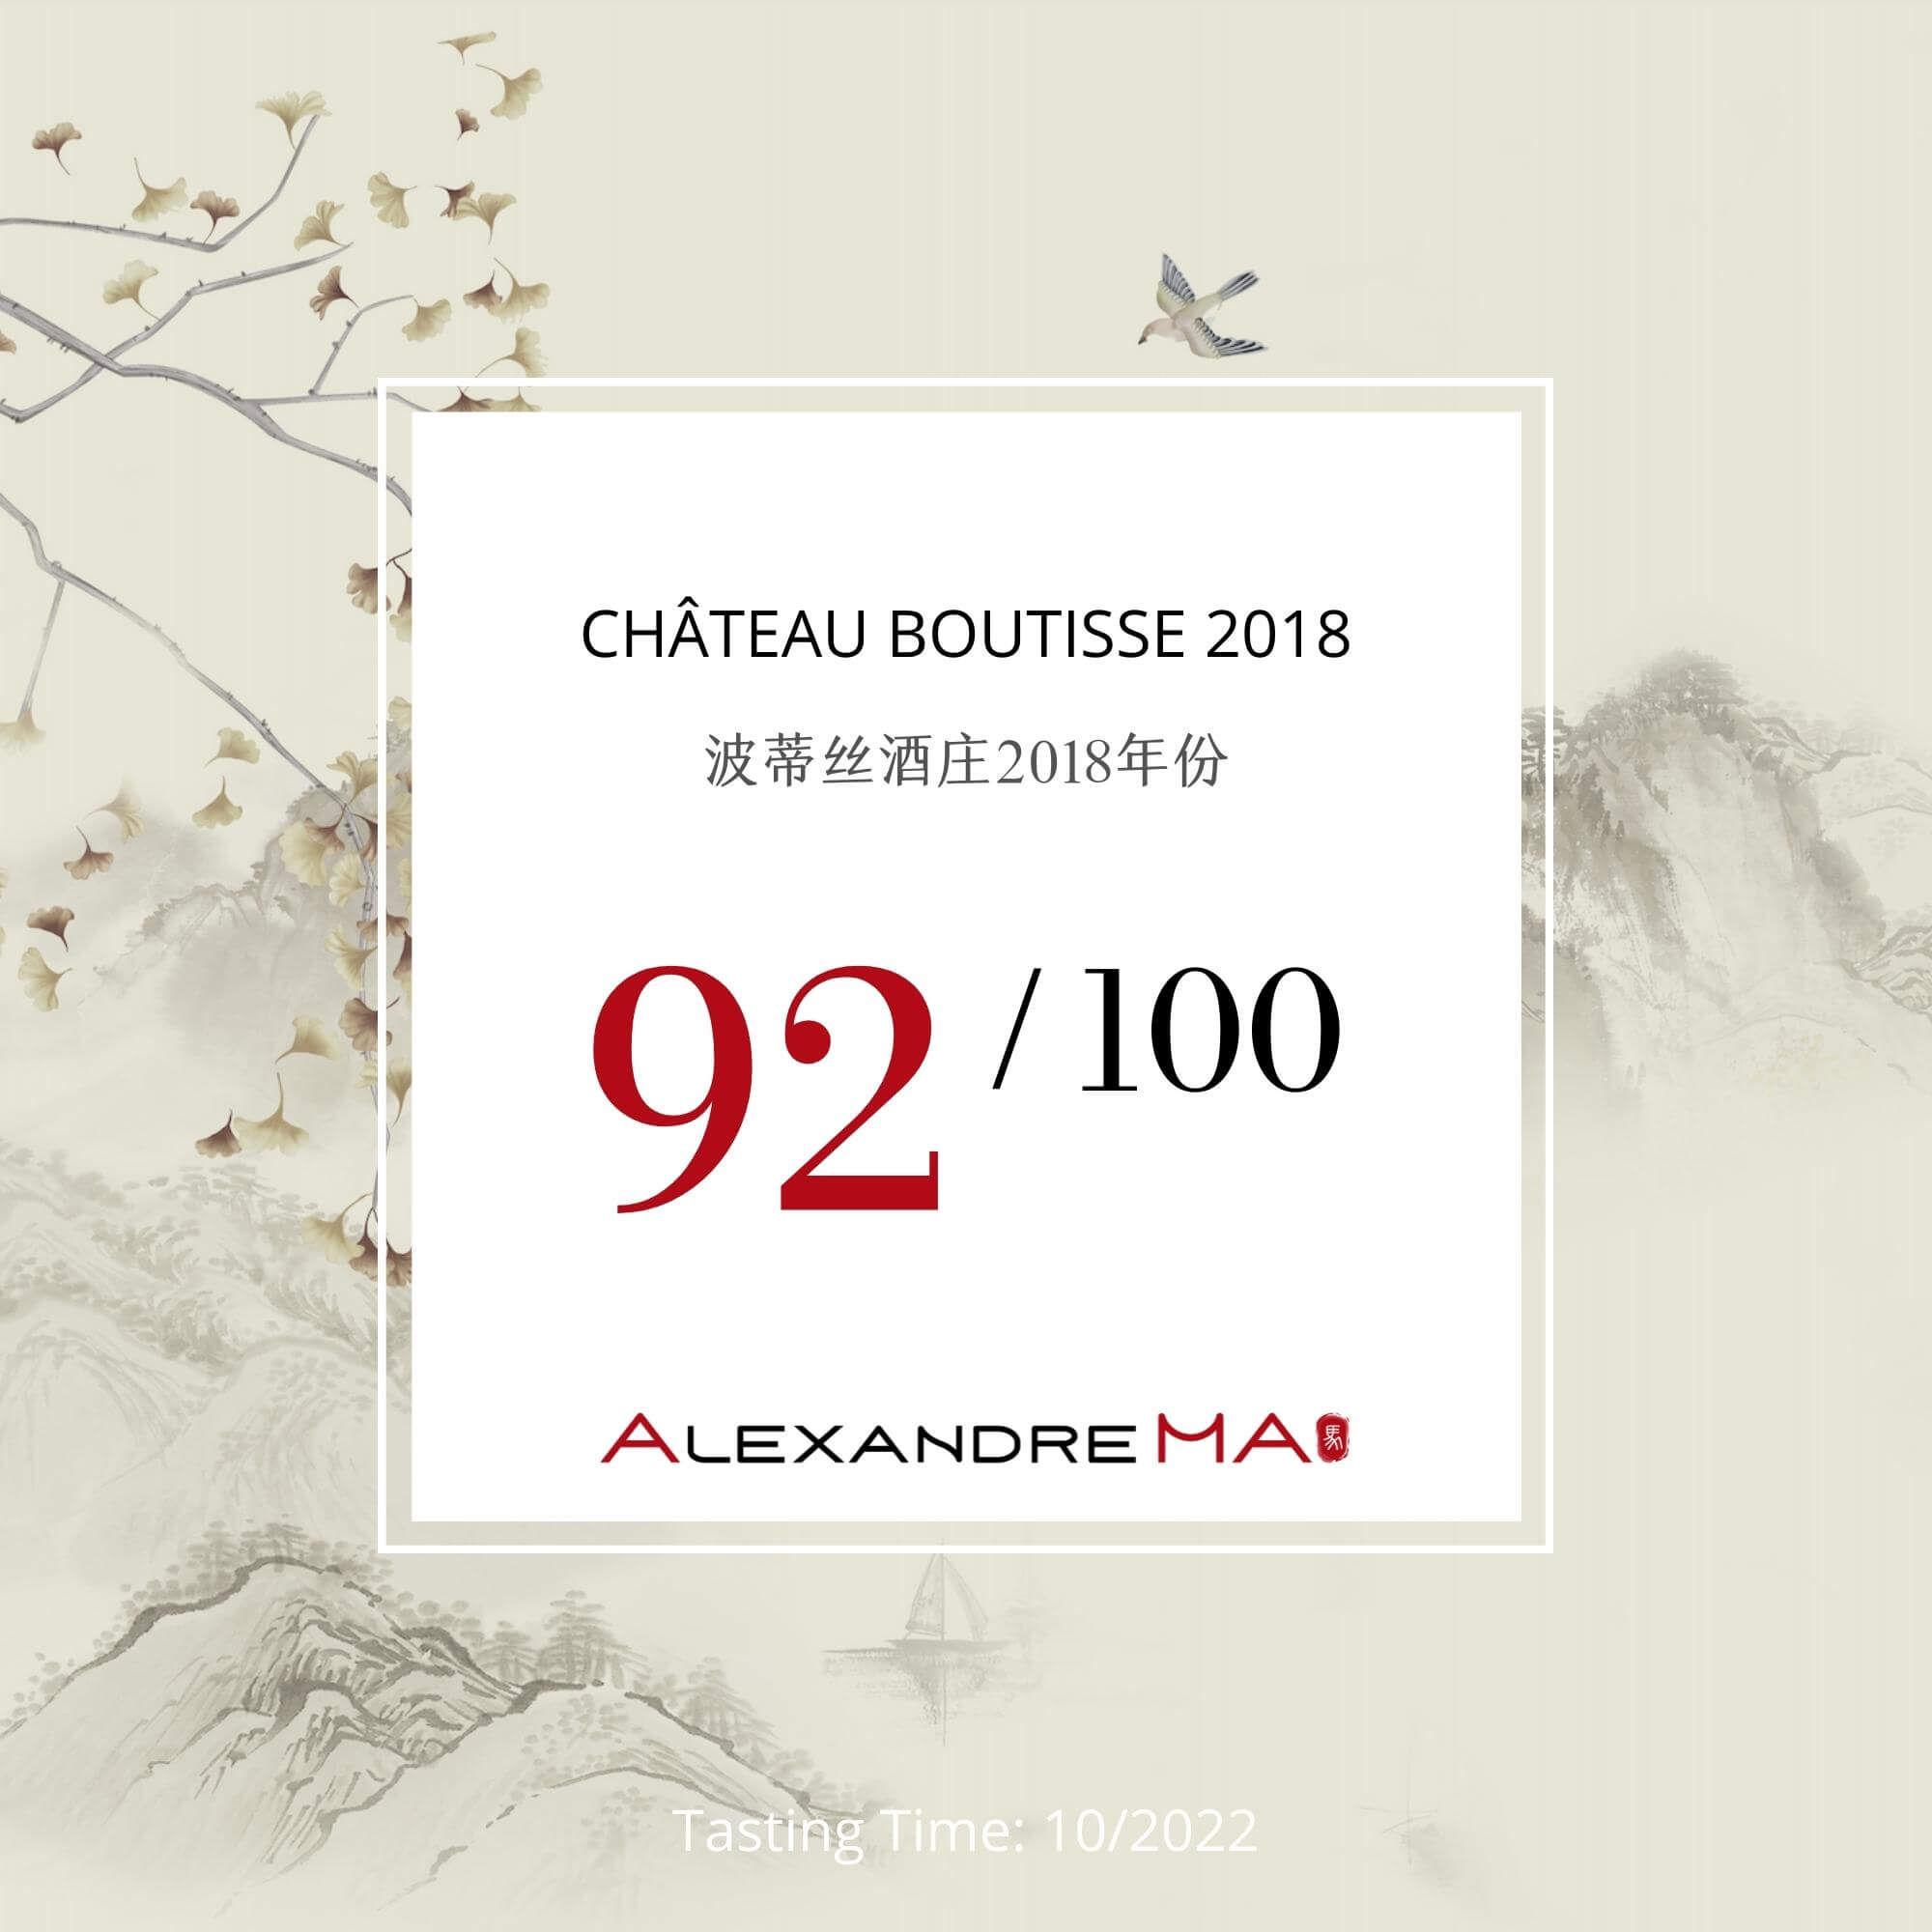 Château Boutisse 2018 - Alexandre MA